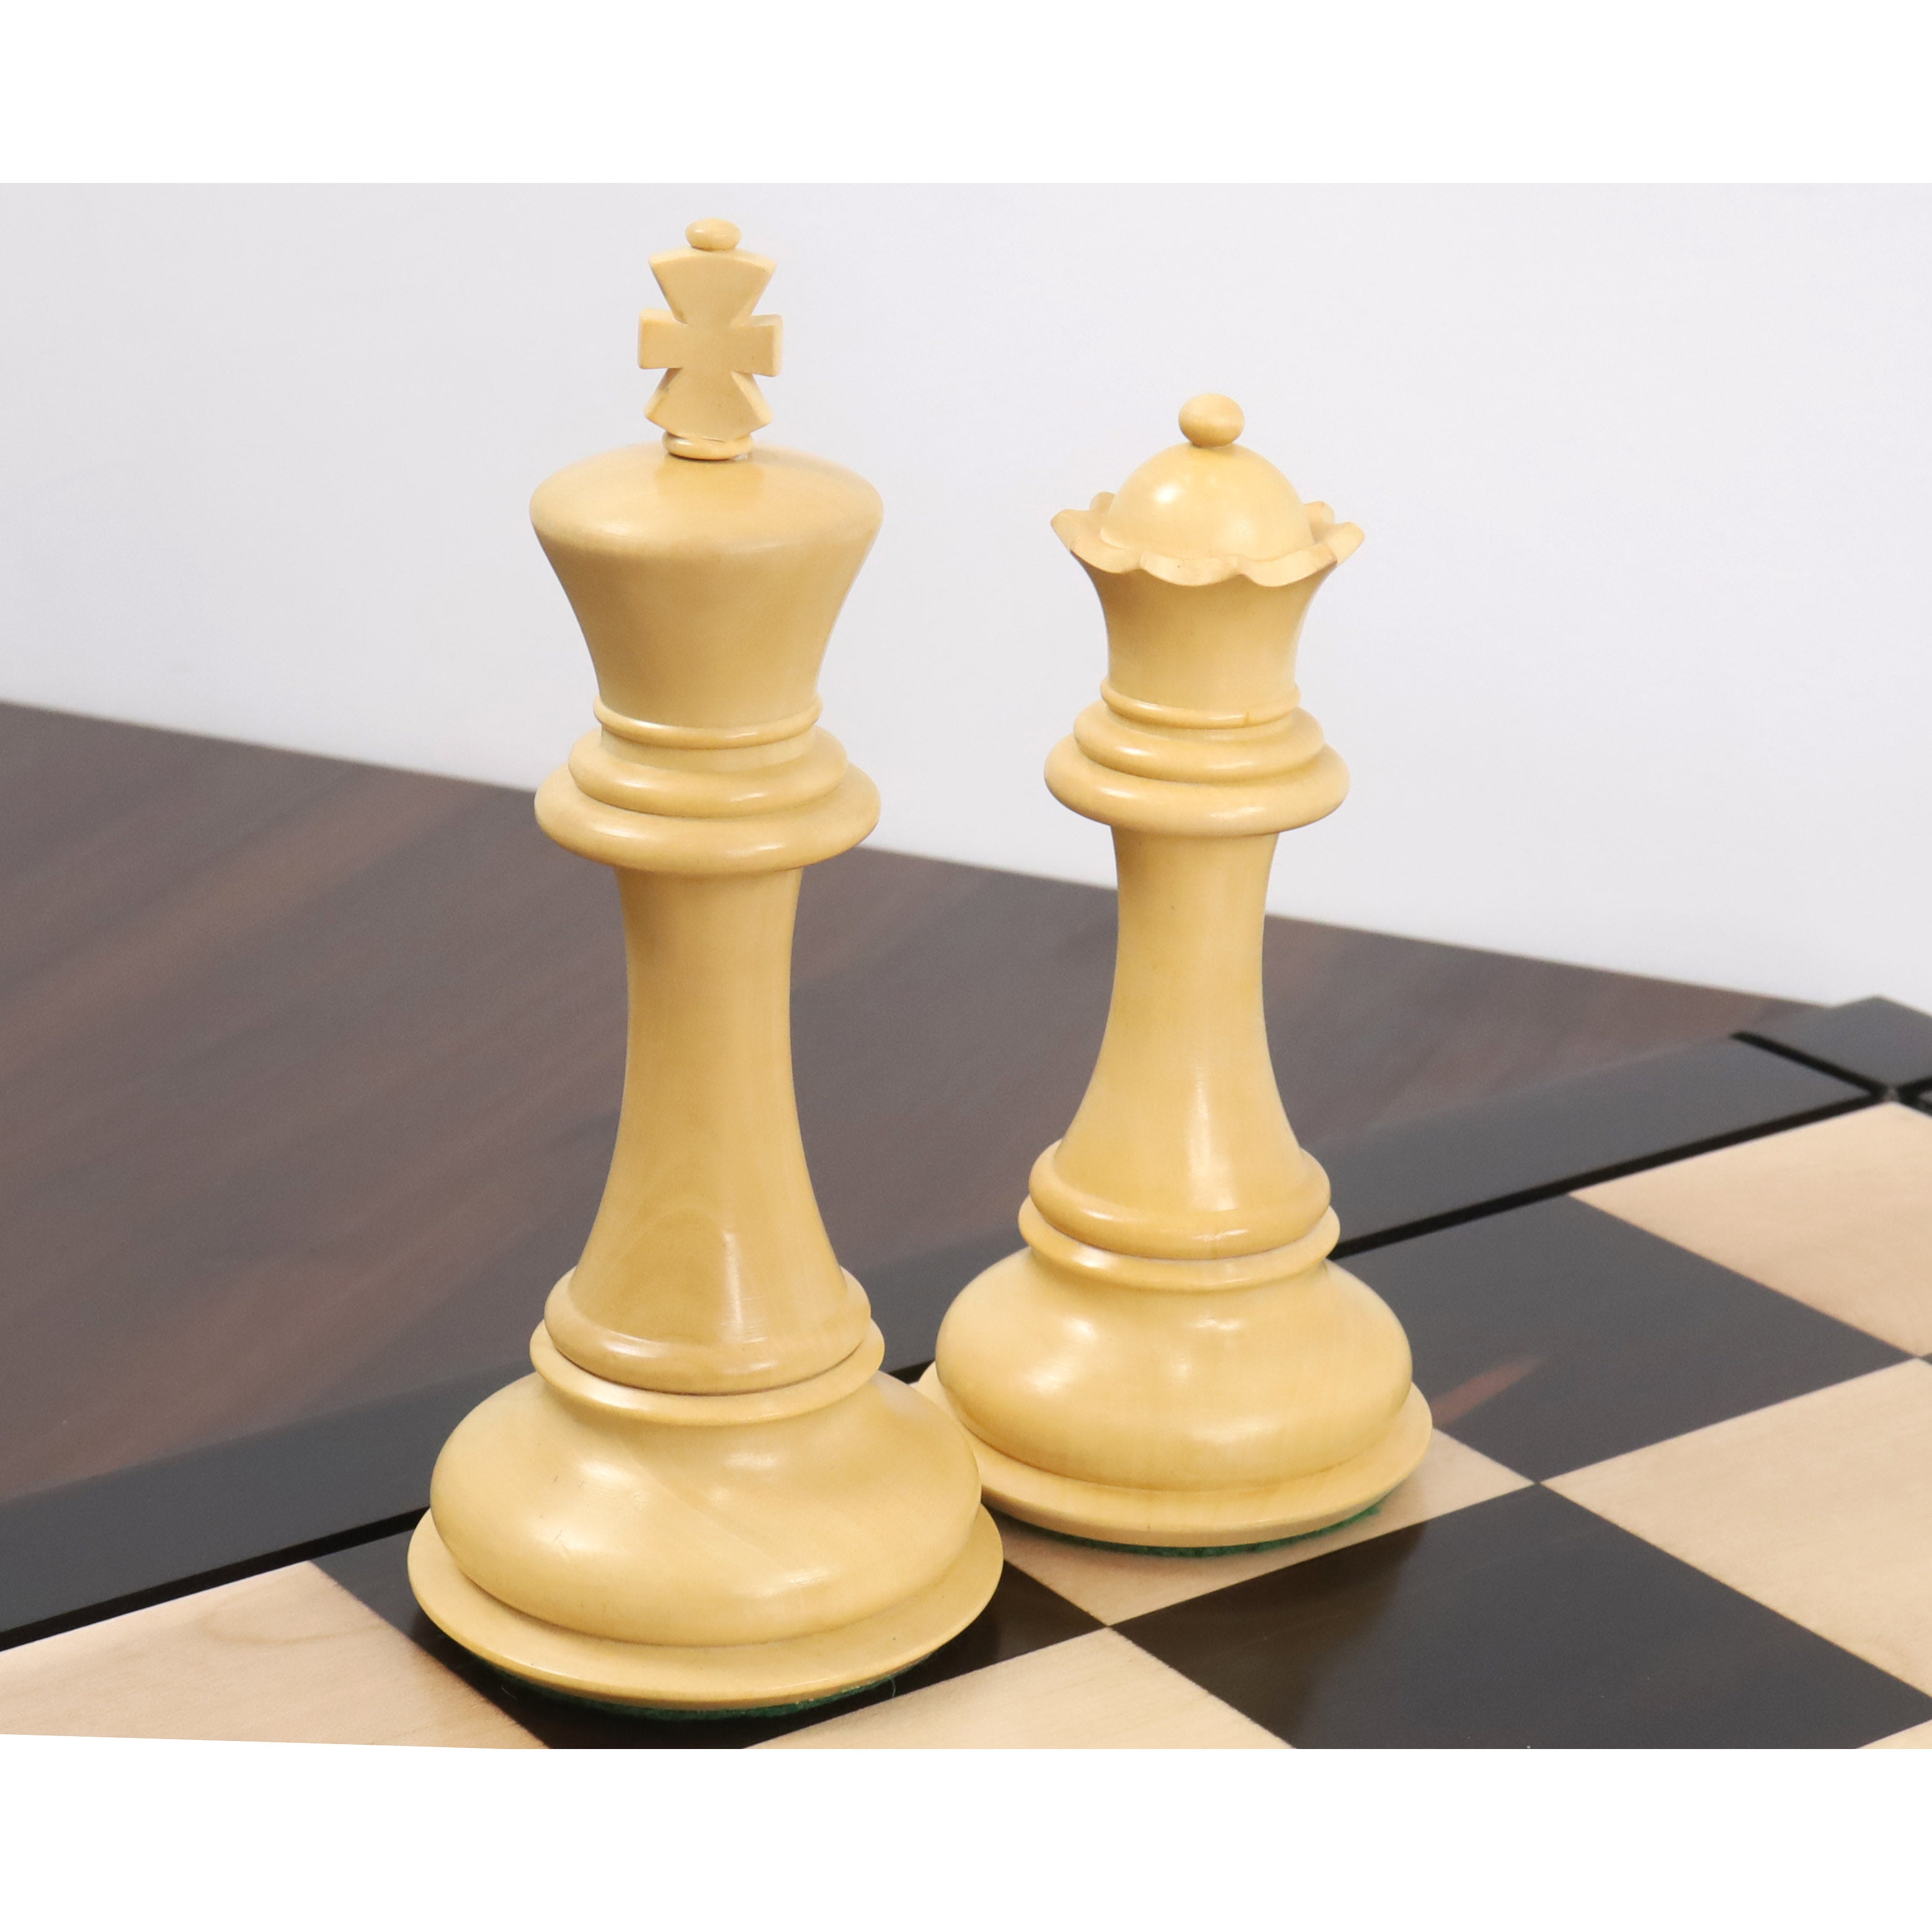 6.3" Jumbo Pro Staunton Luxury Chess Set- Chess Pieces Only - Golden Rosewood & Boxwood